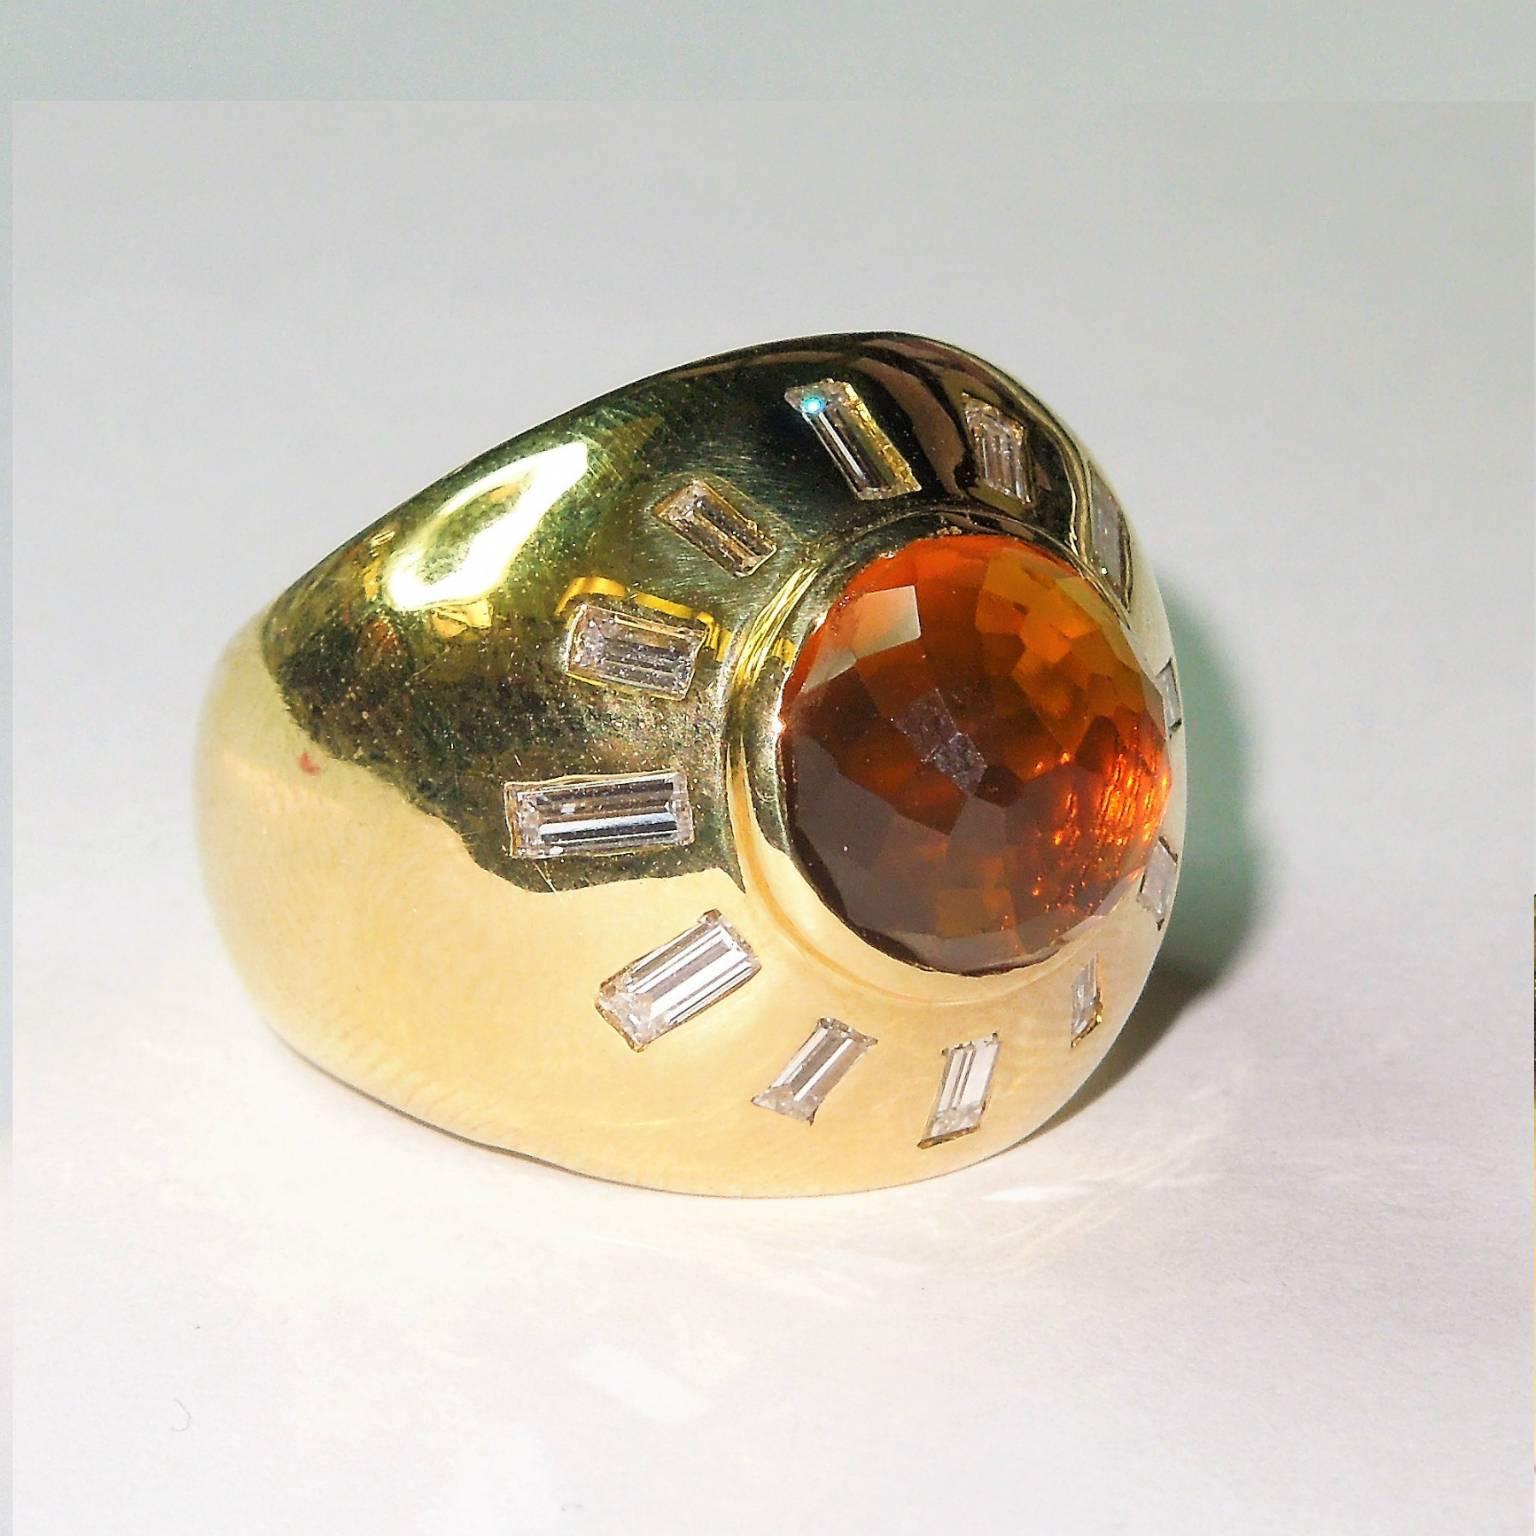 18K Gold Ring with Checker-board cut Orange Quartz Center and Emerald Cut Diamonds

Orange Quartz Center 6.00ct apprx.

12- Emerald Cut Diamonds. Apprx. 1.20ct 

Ring face width: 0.8 inch

Currently size 6 but sizable.

Estate
